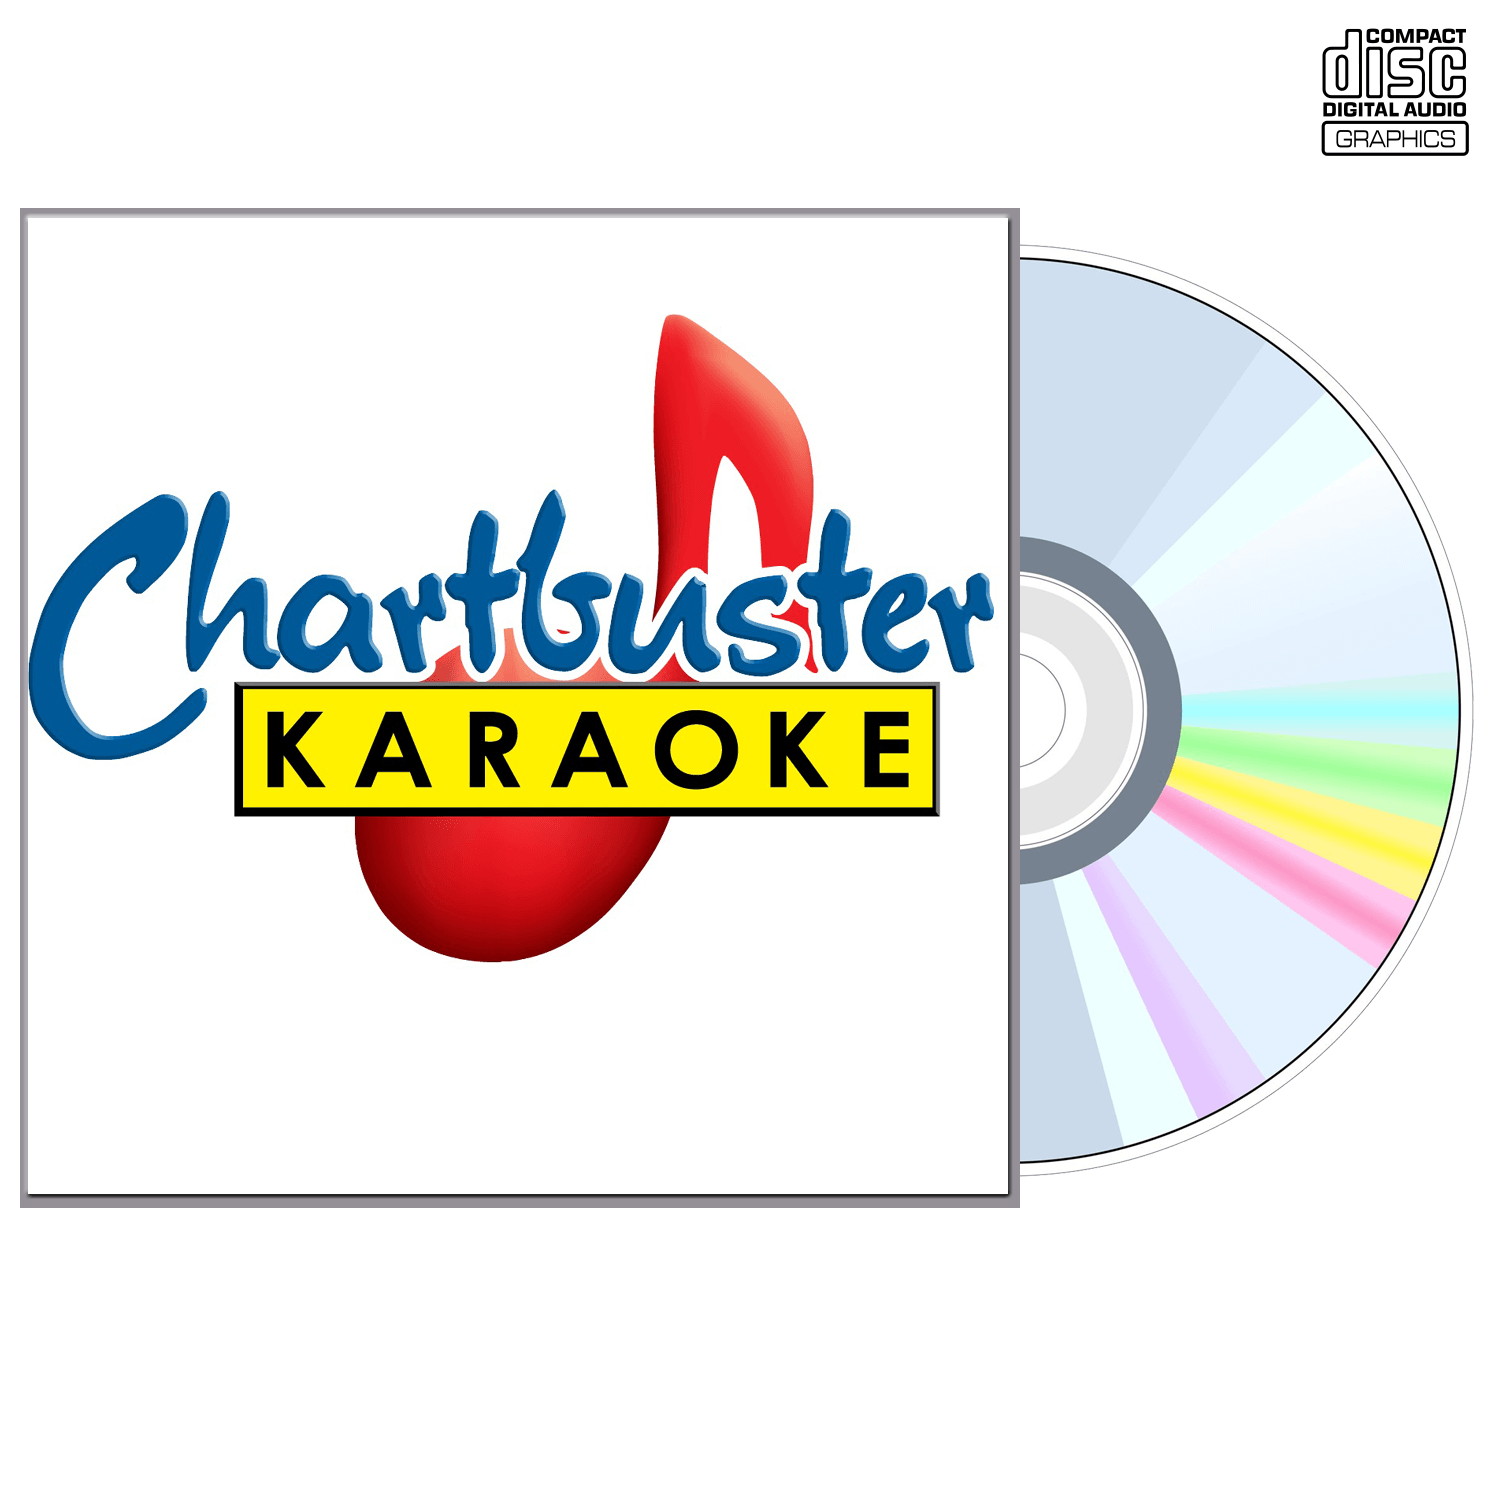 Blaine Larsen - CD+G - Chartbuster Karaoke - Karaoke Home Entertainment